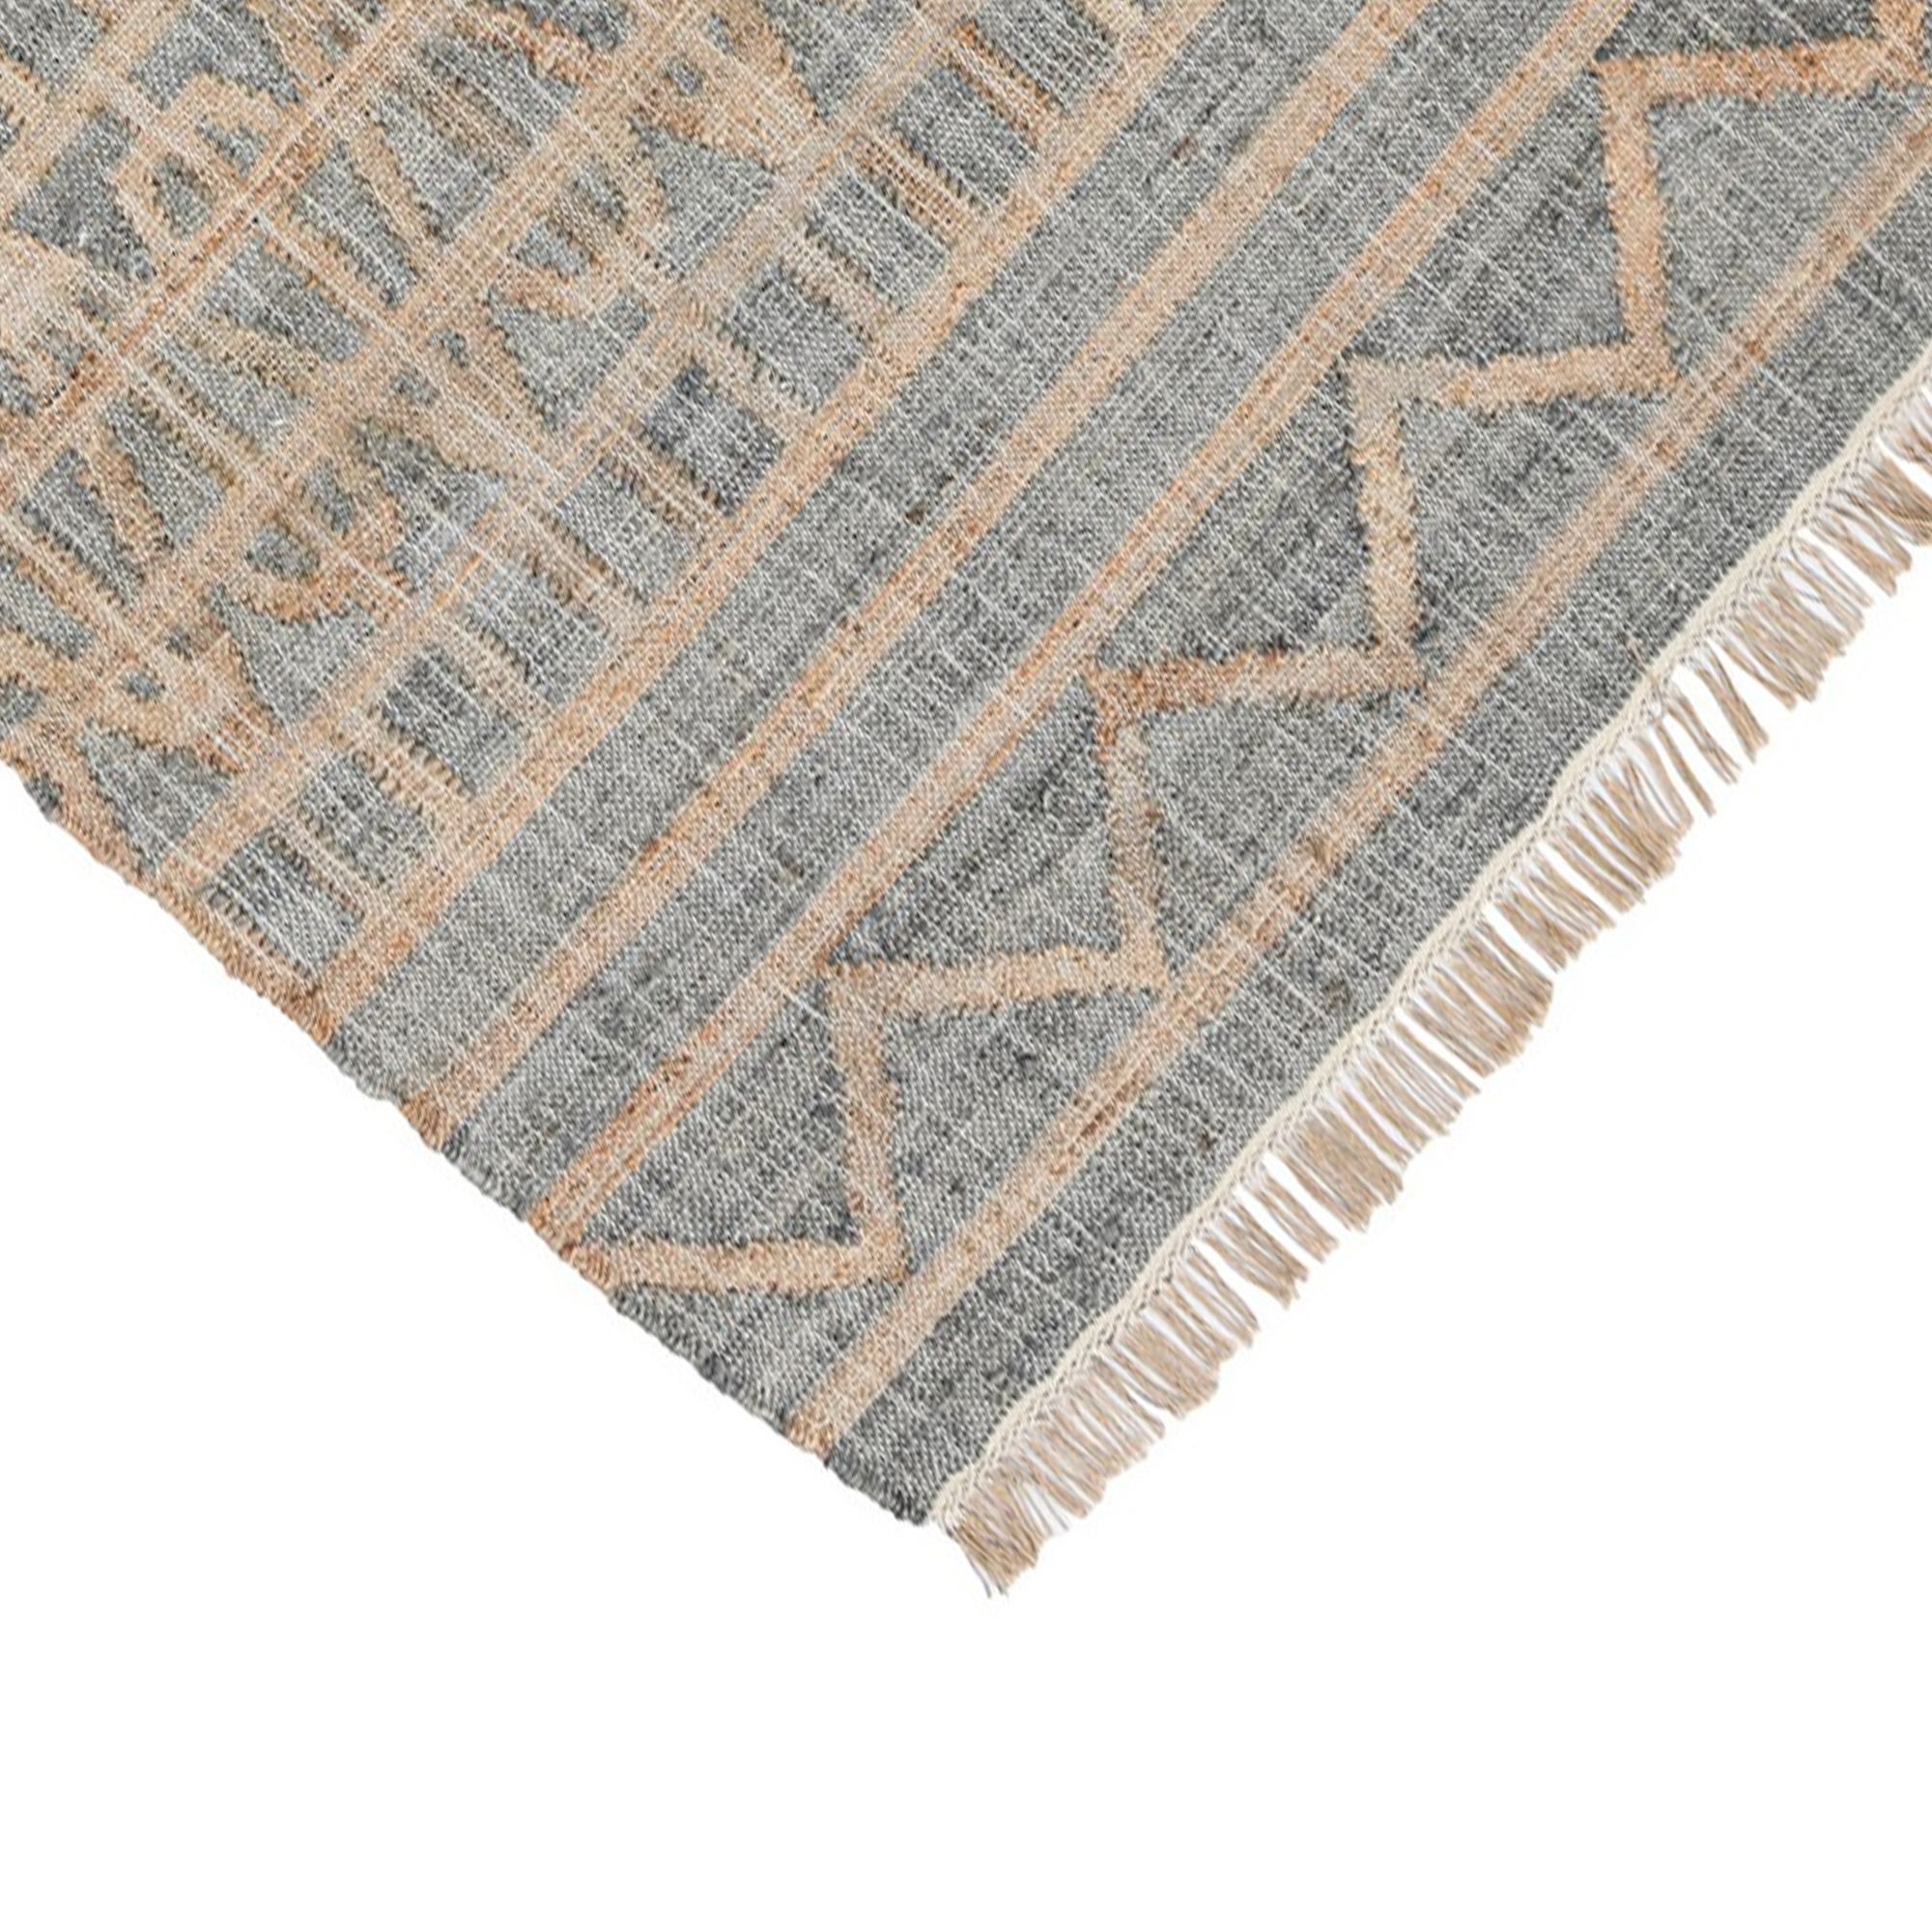 Myra 8 X 10 Area Rug, Soft Handwoven Moroccan Pattern, Brown And Blue Jute- Saltoro Sherpi